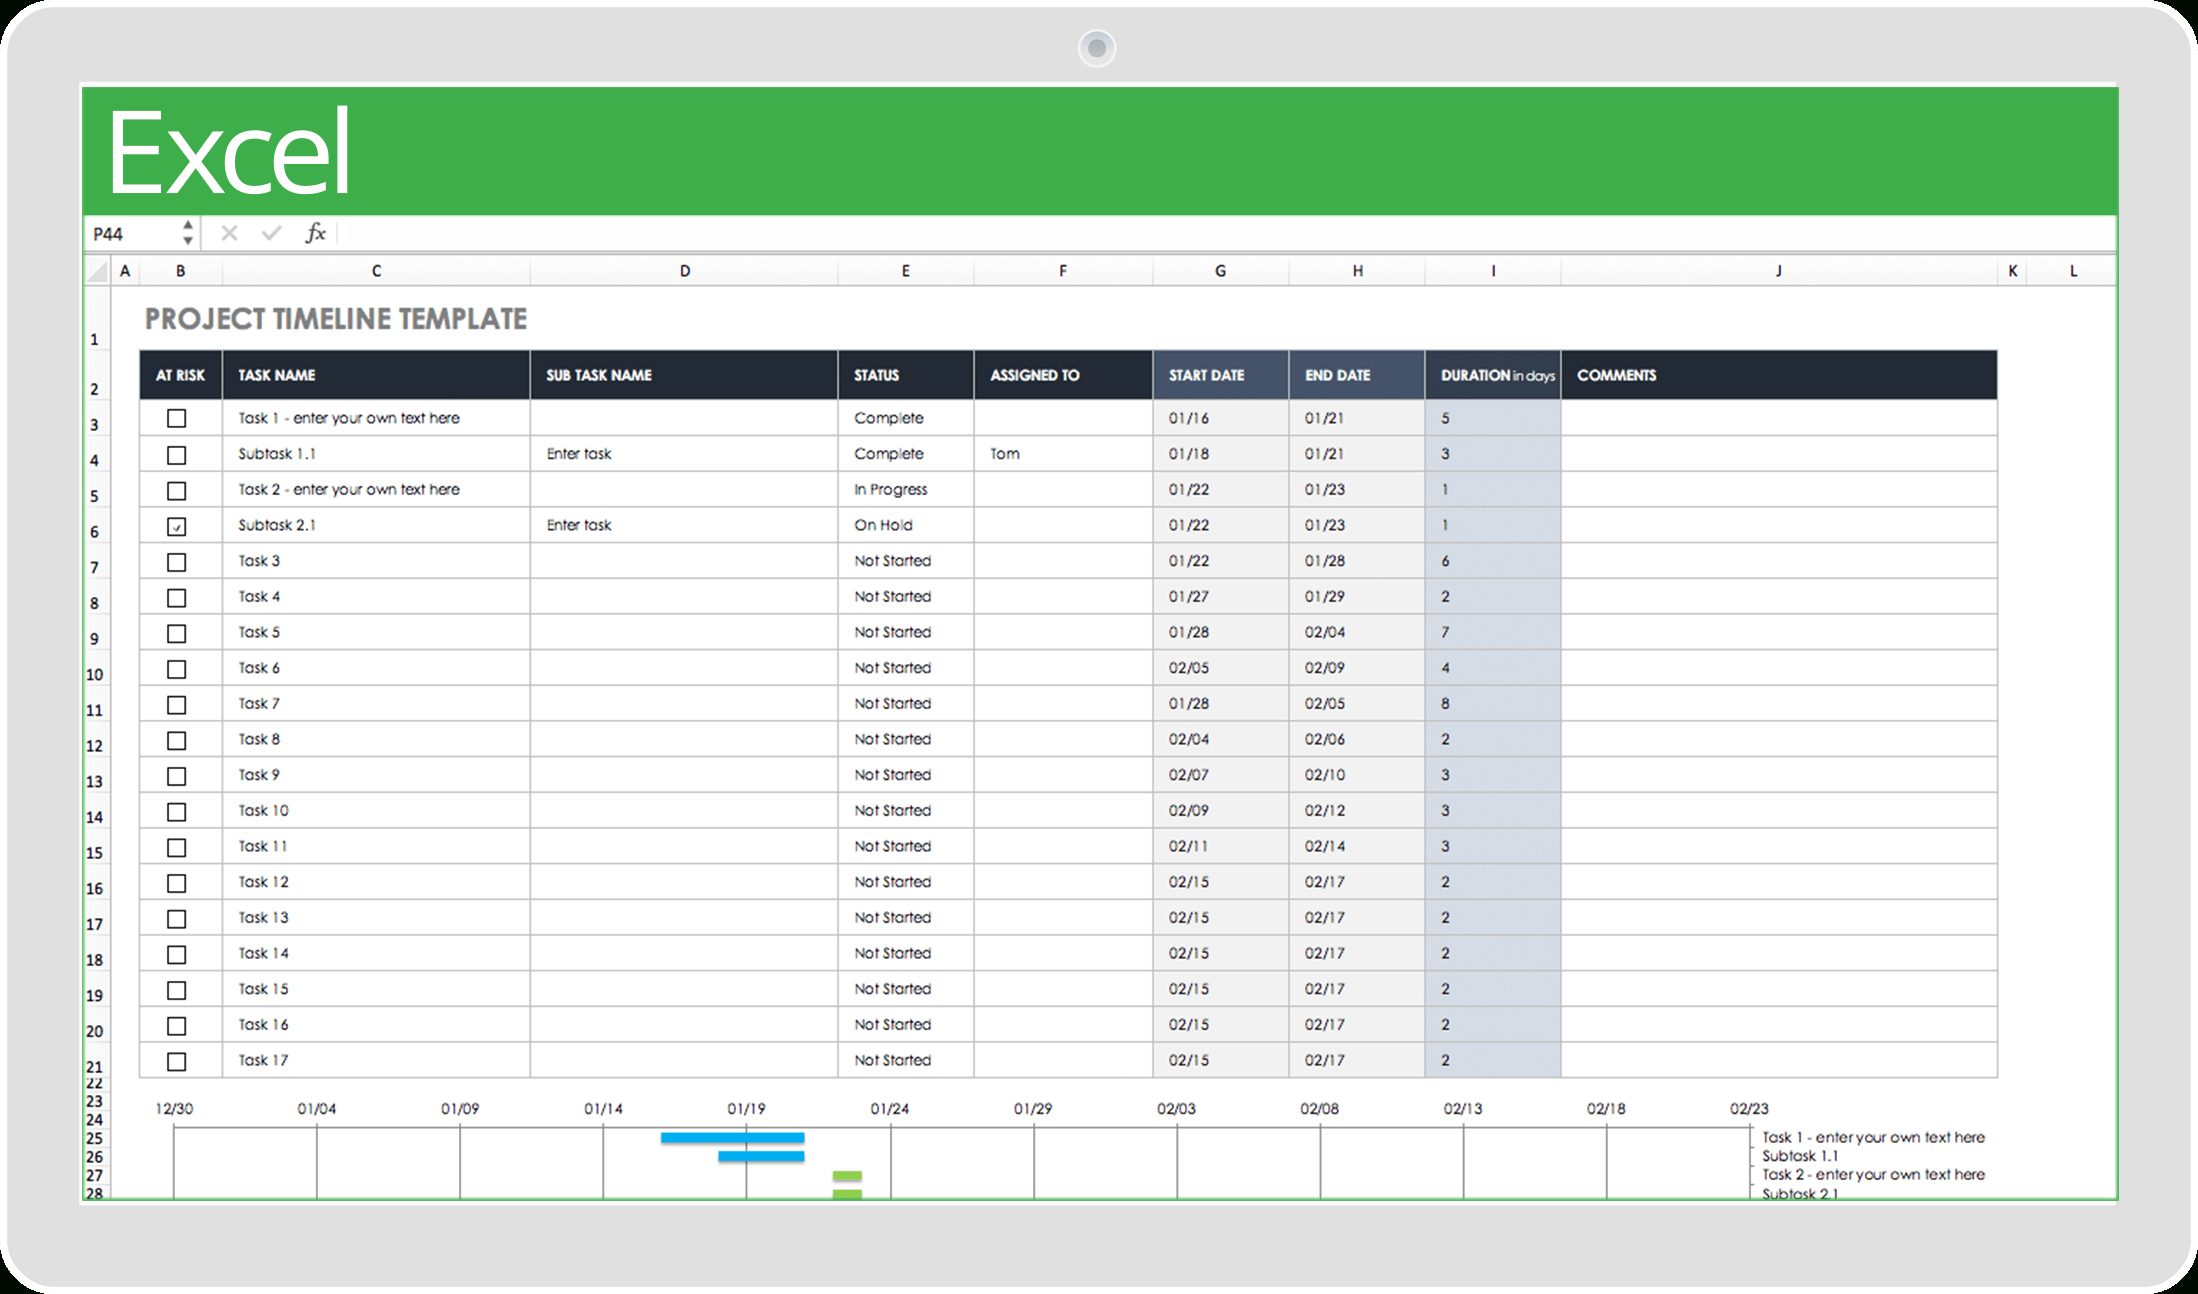 32 Free Excel Spreadsheet Templates | Smartsheet For Expense Report Spreadsheet Template Excel